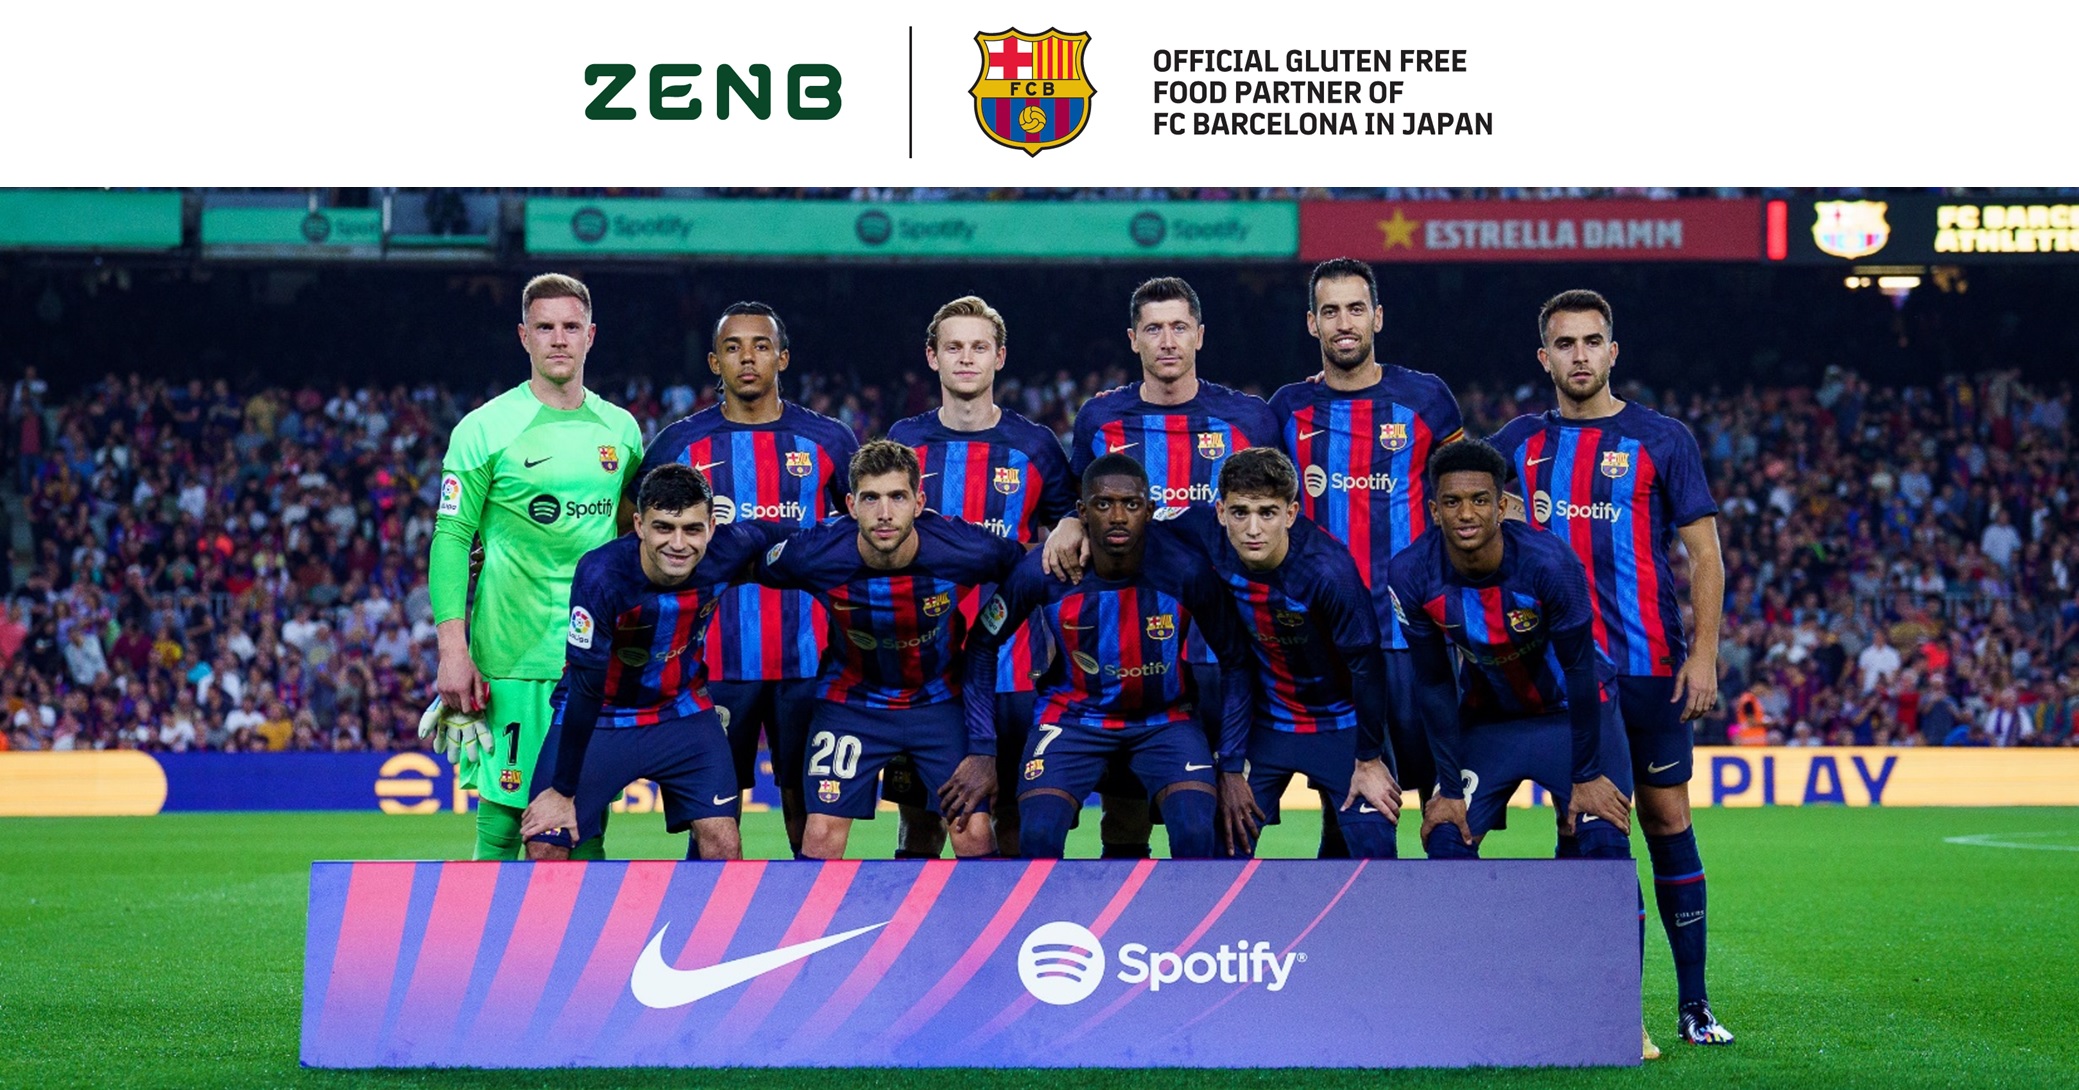 Zenb Fcバルセロナとクラブ初の公式グルテンフリーフードパートナーとして契約合意 株式会社mizkan Holdingsのプレスリリース